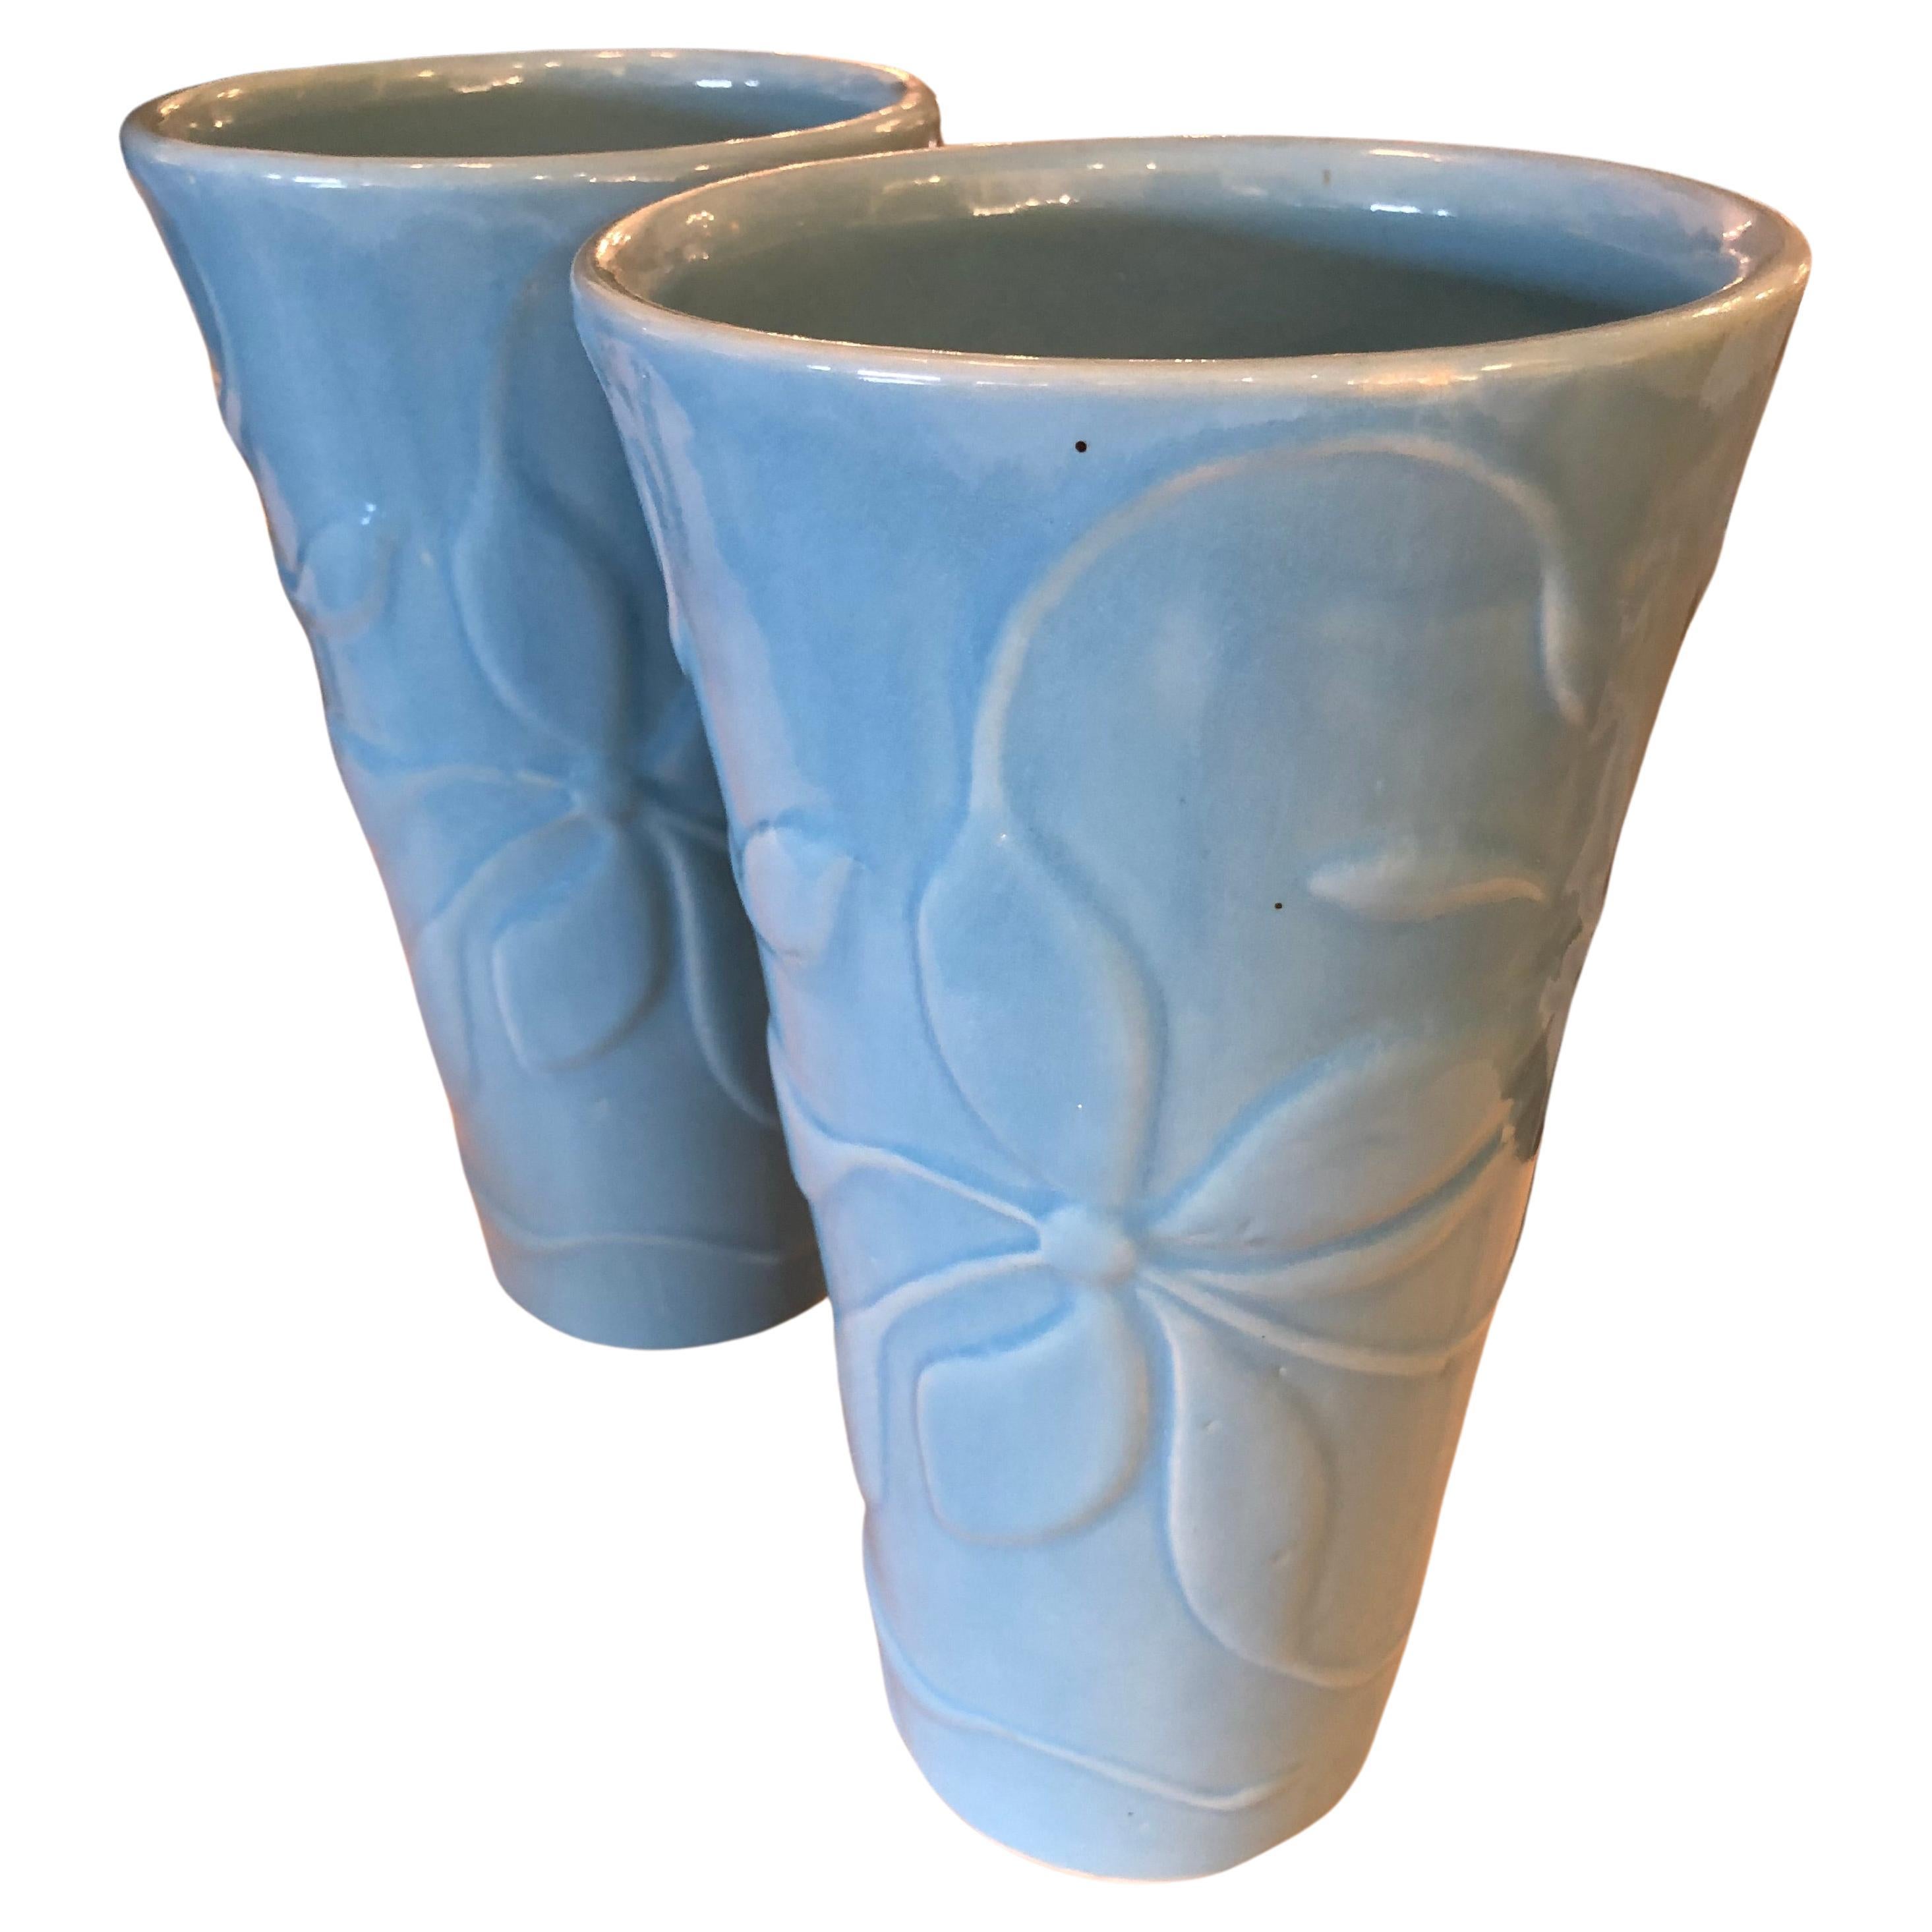 Striking Pair of Sky Blue Pottery Vases